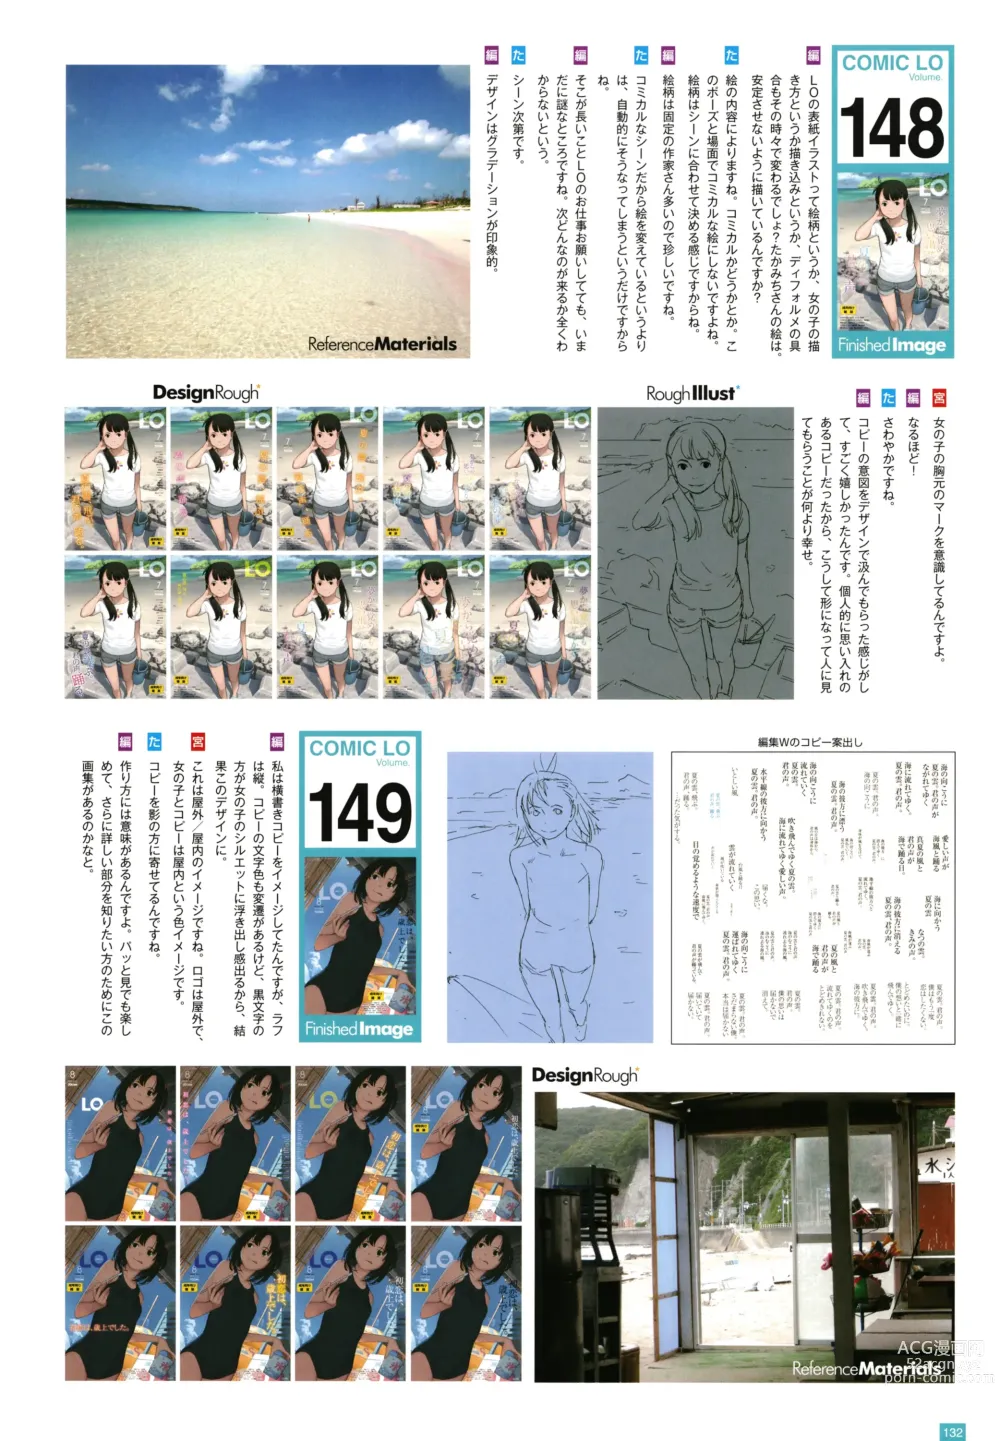 Page 135 of manga LO Artbook 2-B TAKAMICHI LO-fi WORKS